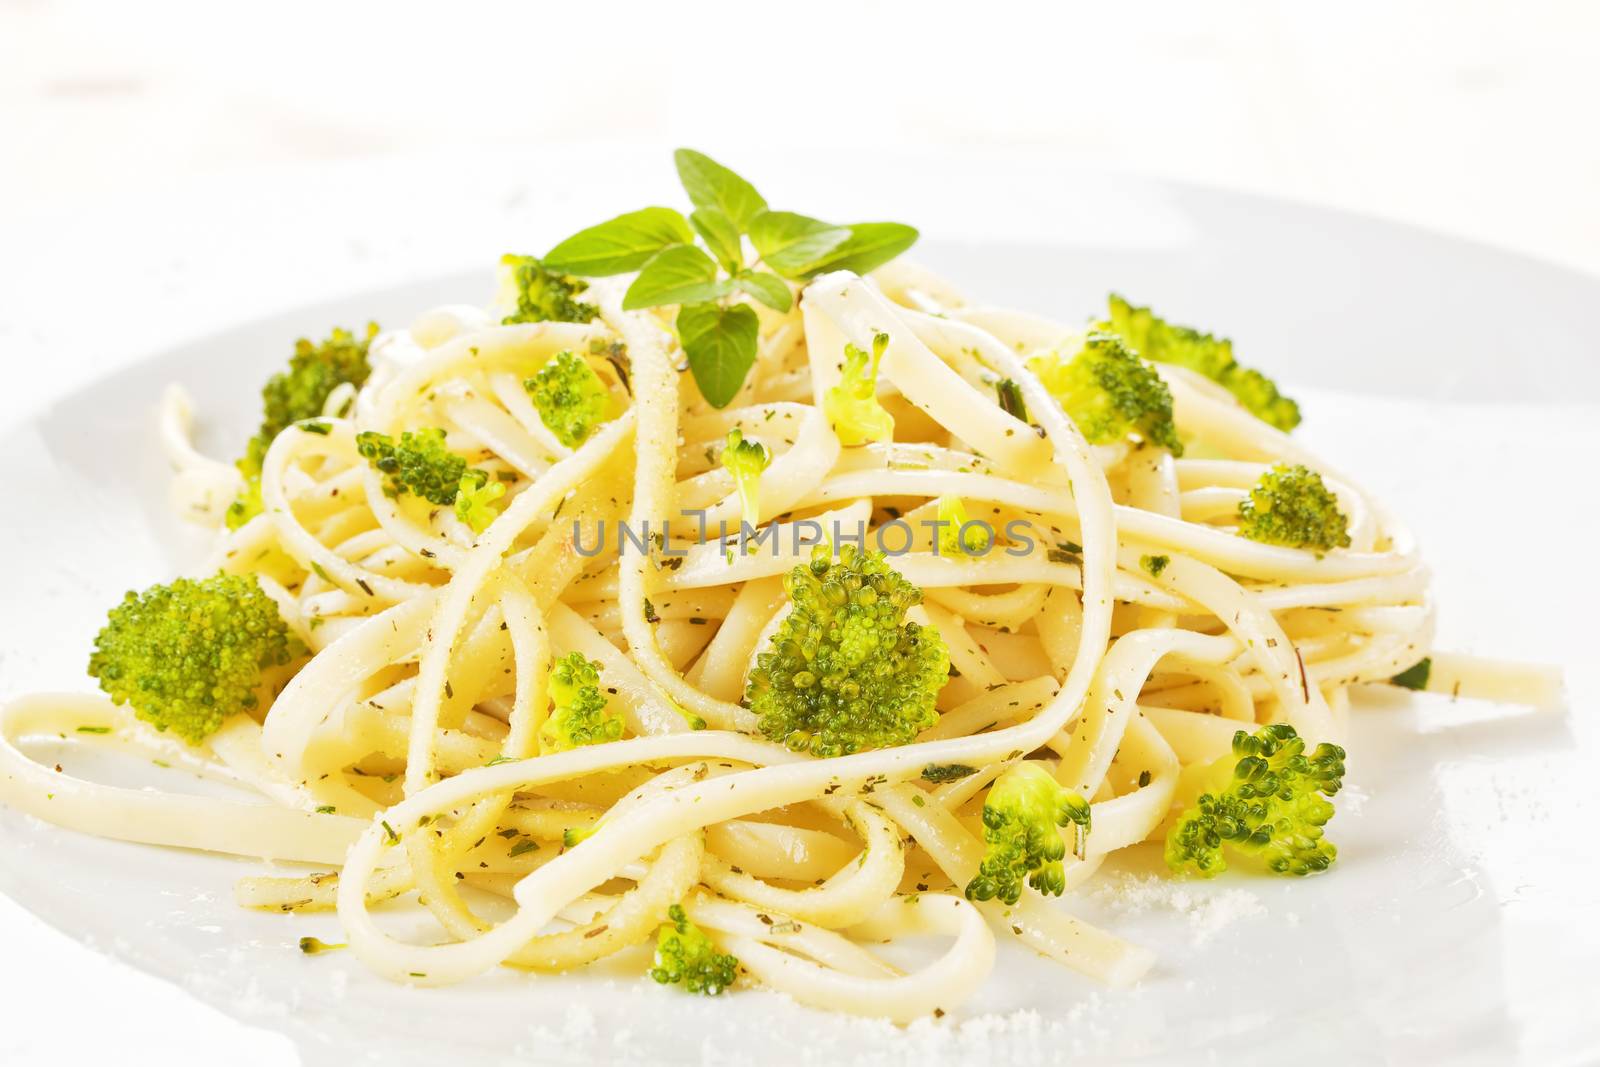 Traditional spaghetti carbonara with broccoli close up. Italian cuisine.